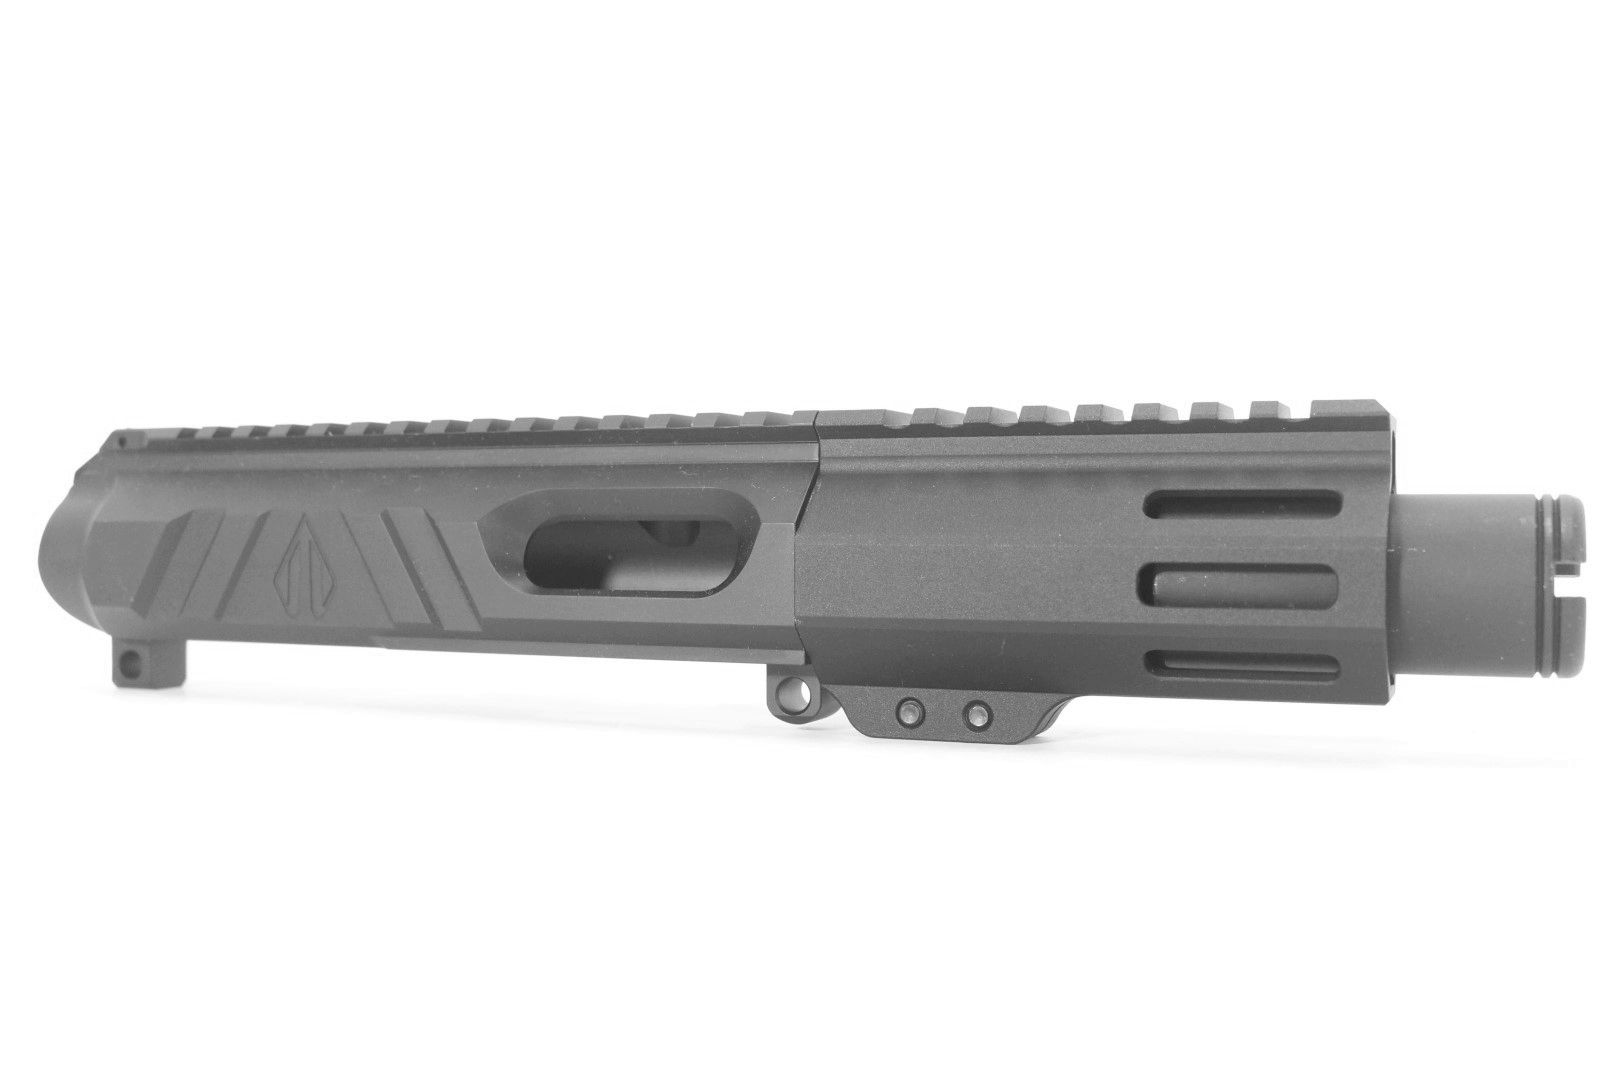 3 inch 45 ACP AR-15 Upper| NR Side Charging | Pistol Caliber